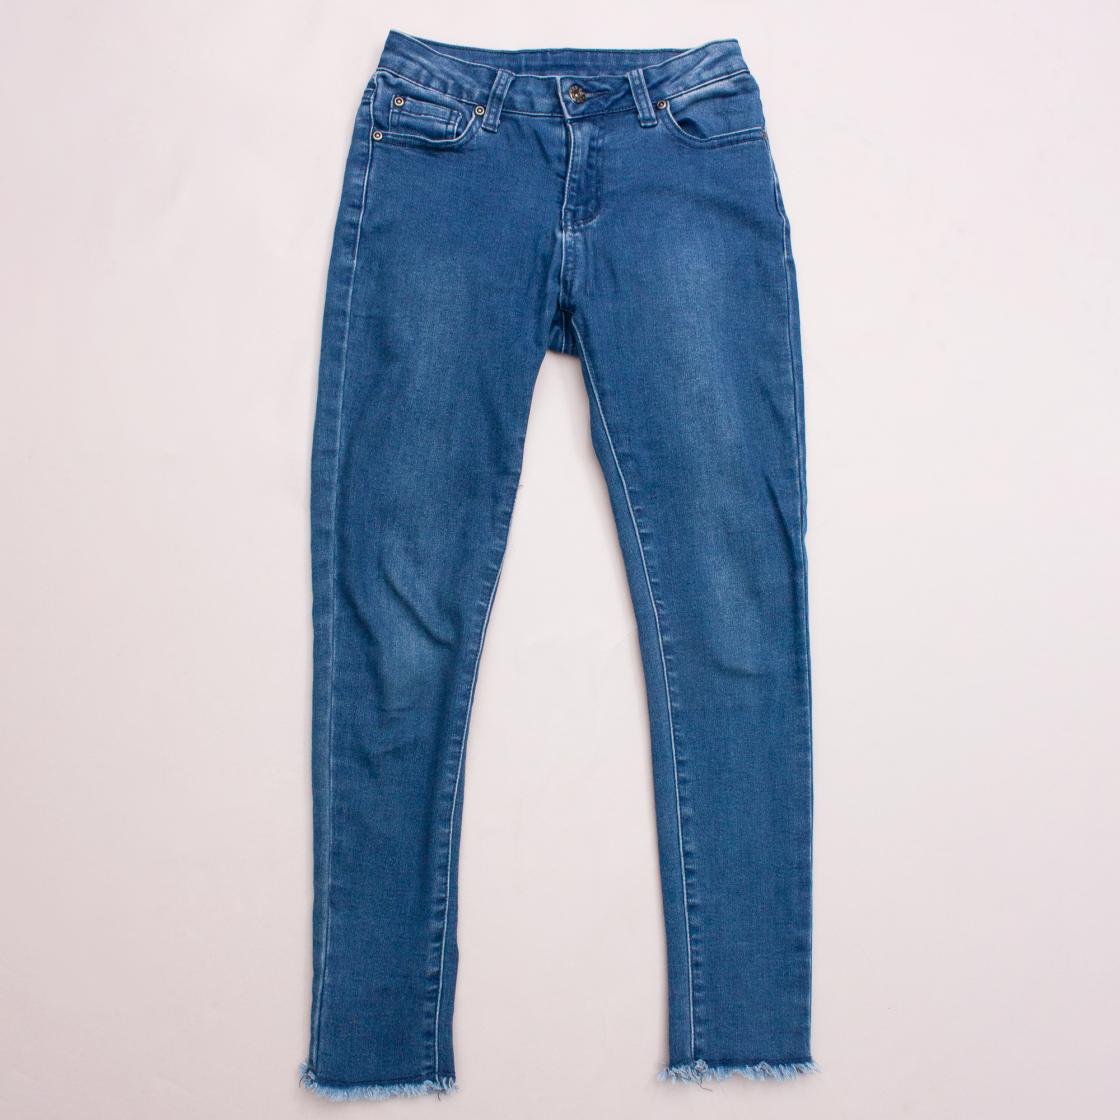 Seed Stretch Skinny Jeans